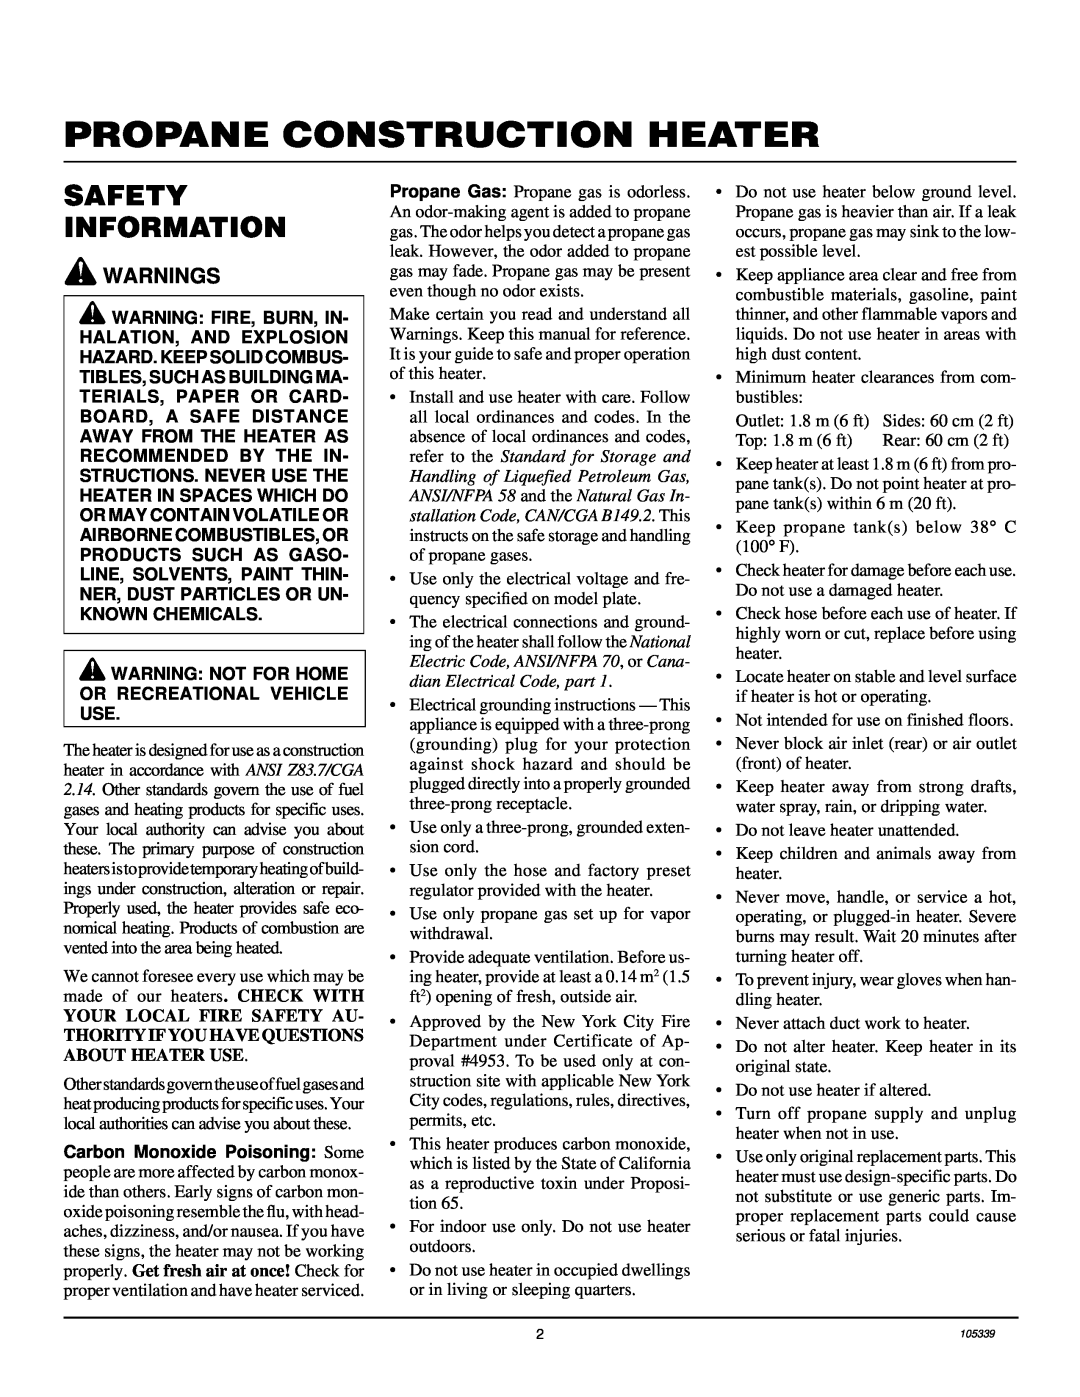 Desa RCLP50VA owner manual Propane Construction Heater, Safety Information 